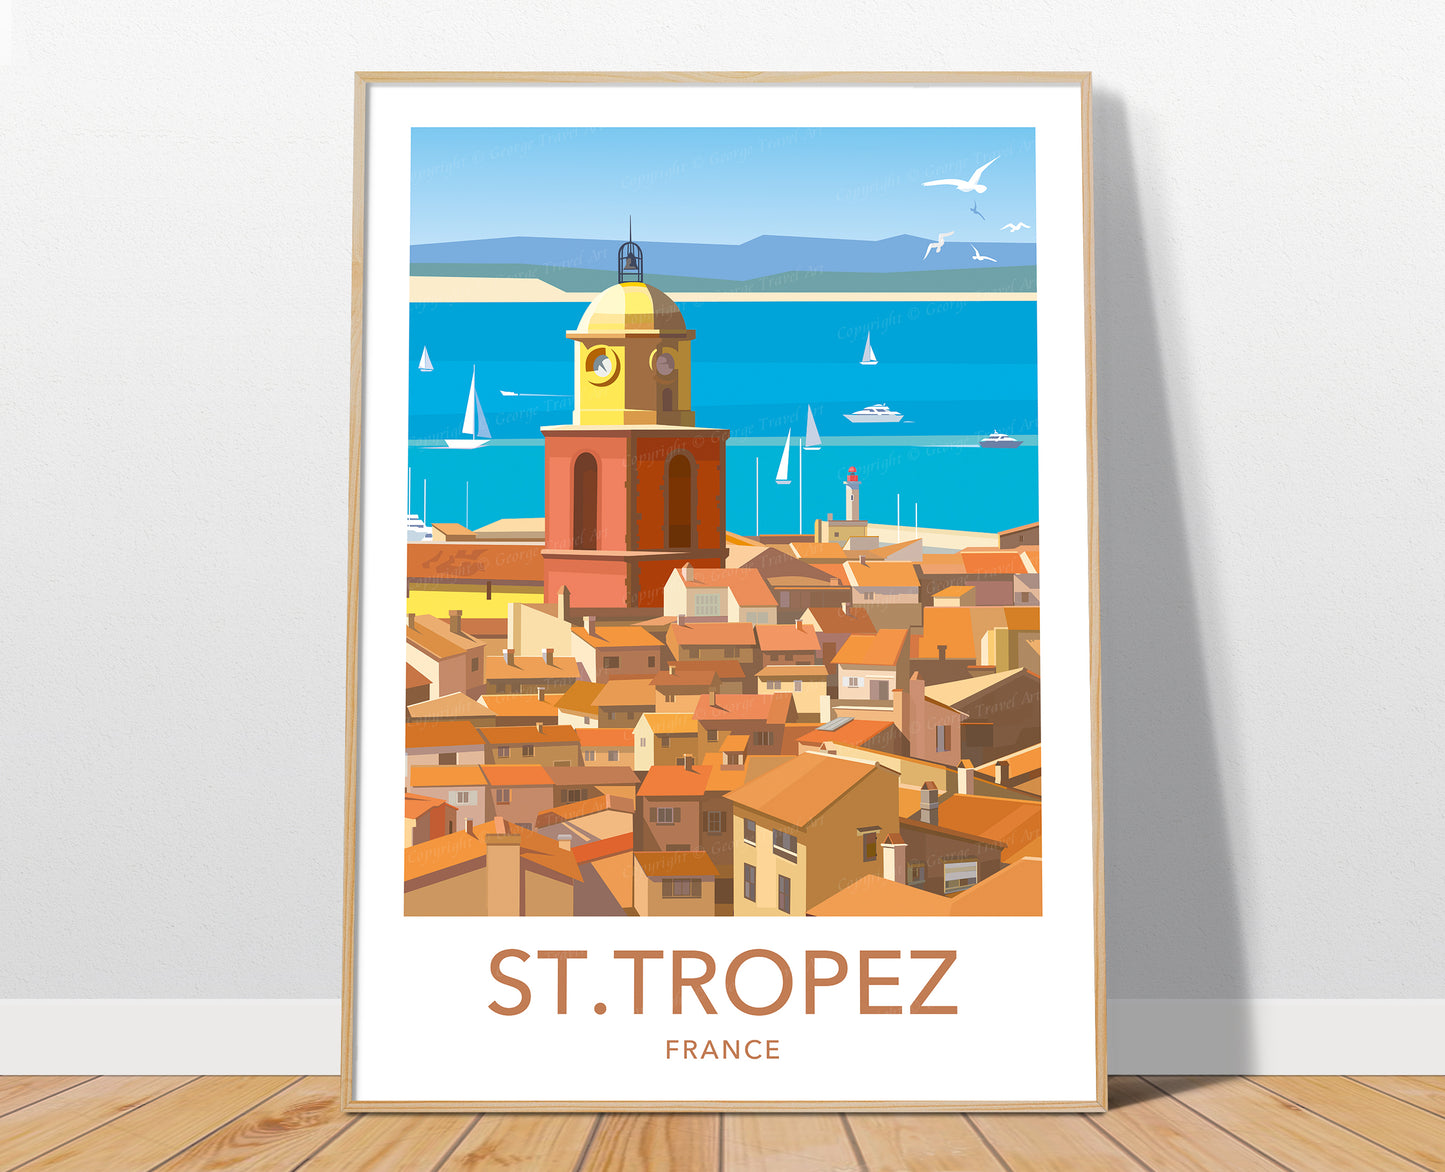 St. Tropez Cote d'azur Travel Poster / French Riviera Travel Print